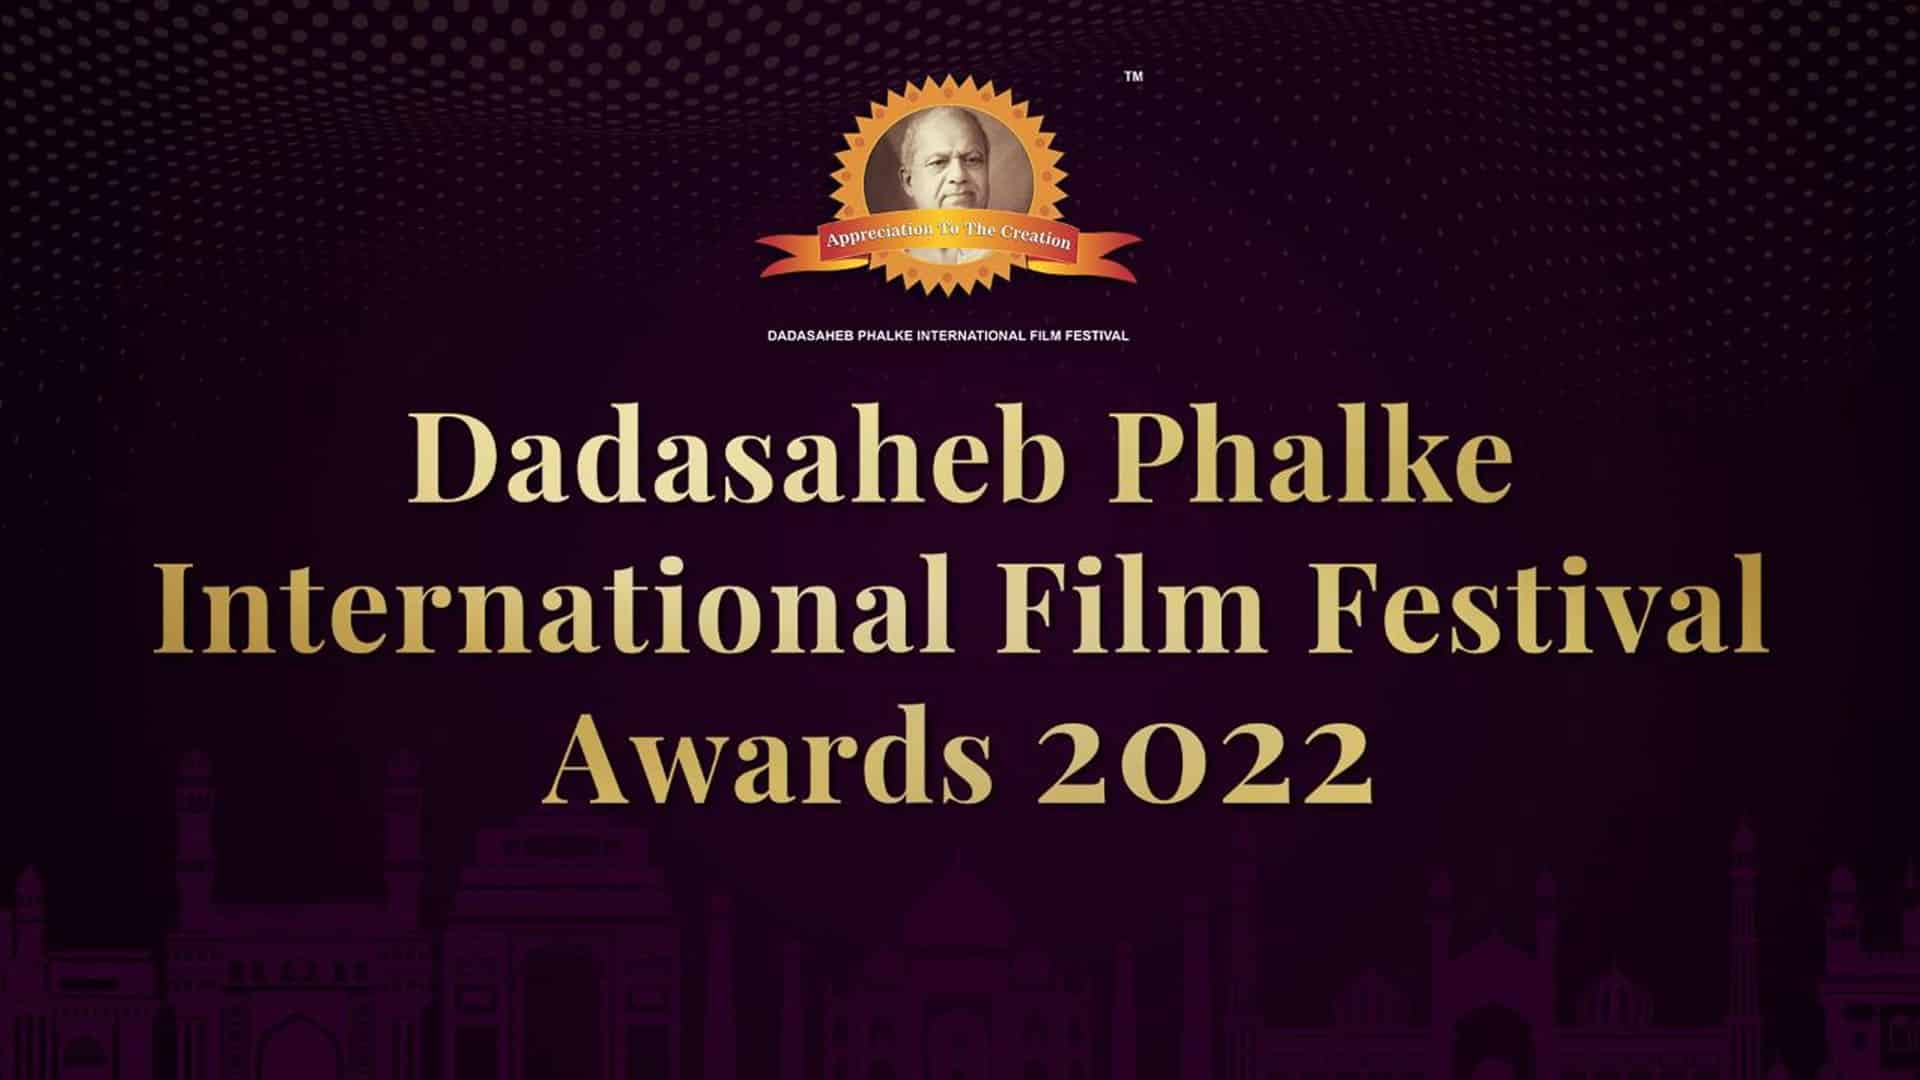 Dada Saheb Phalke International Film Festival Awards 2022